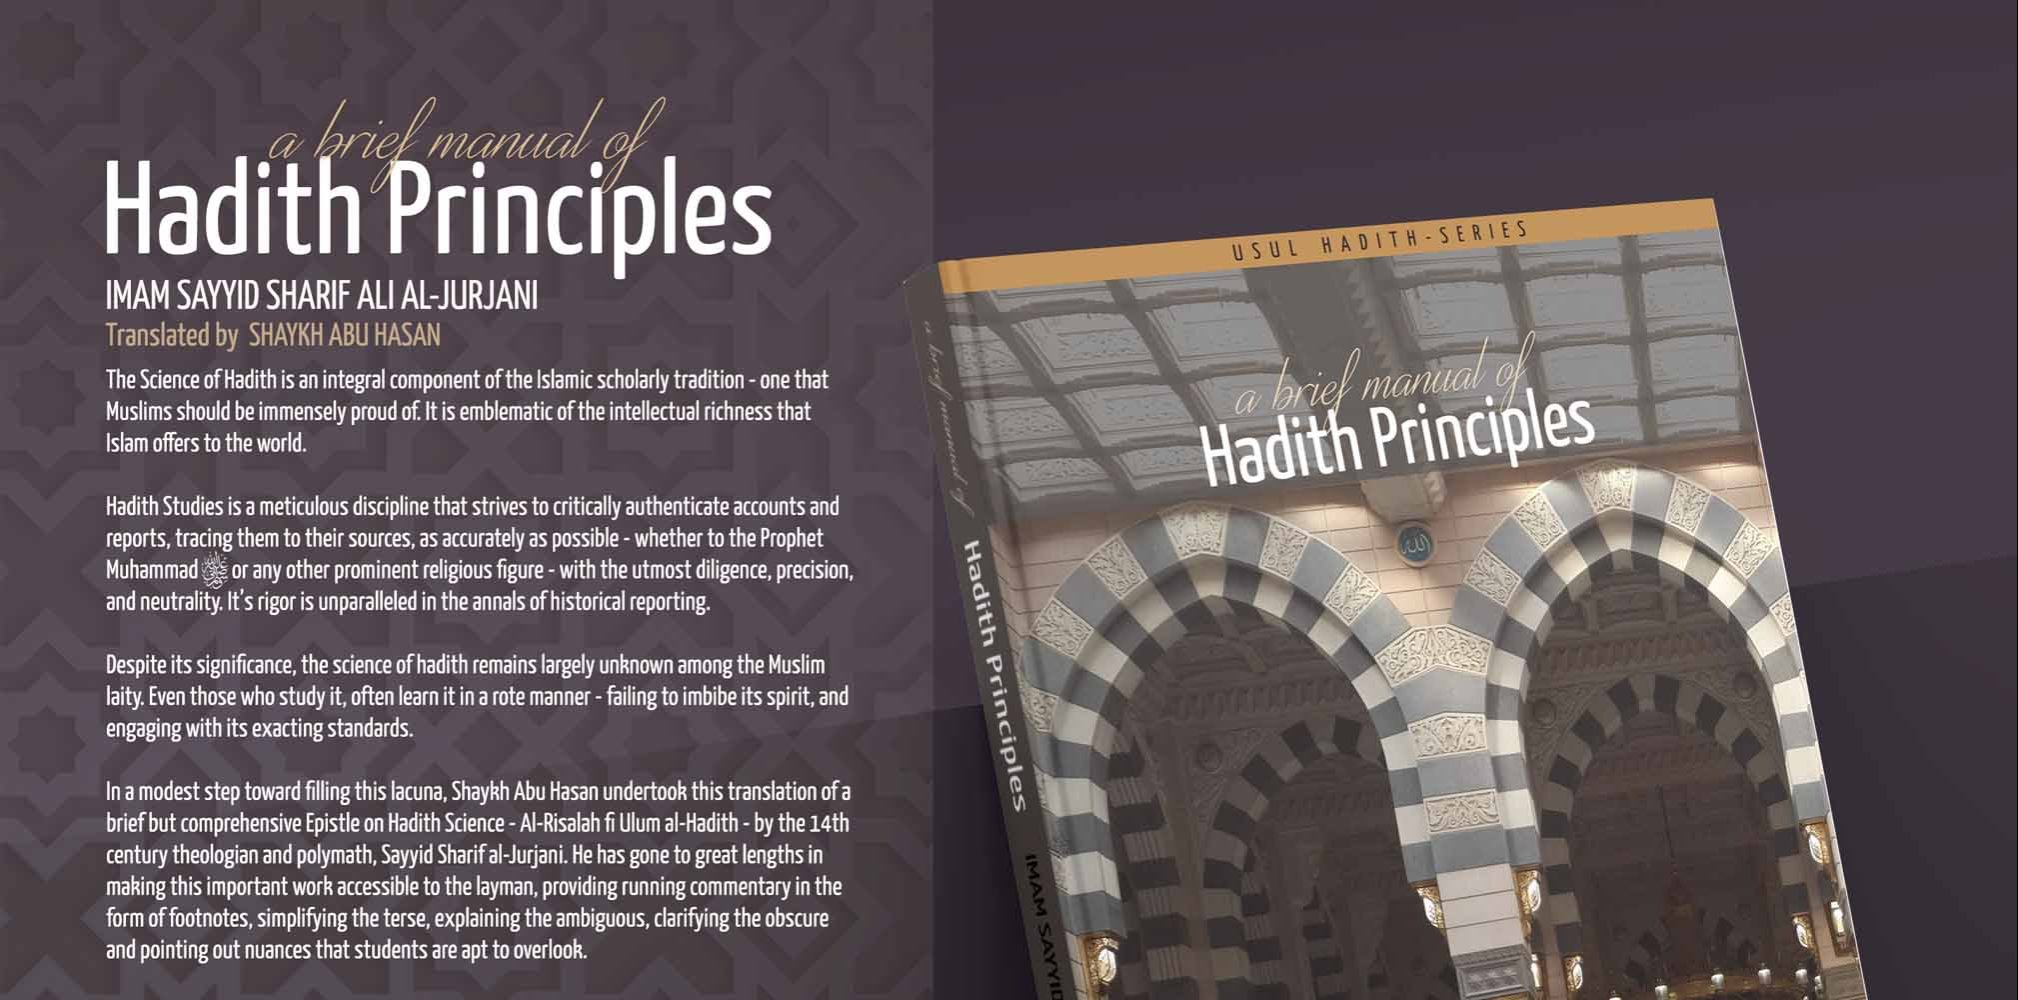 Book Release : Hadith Principles by Imam Sayyid Sharif Ali Al-Jurjani